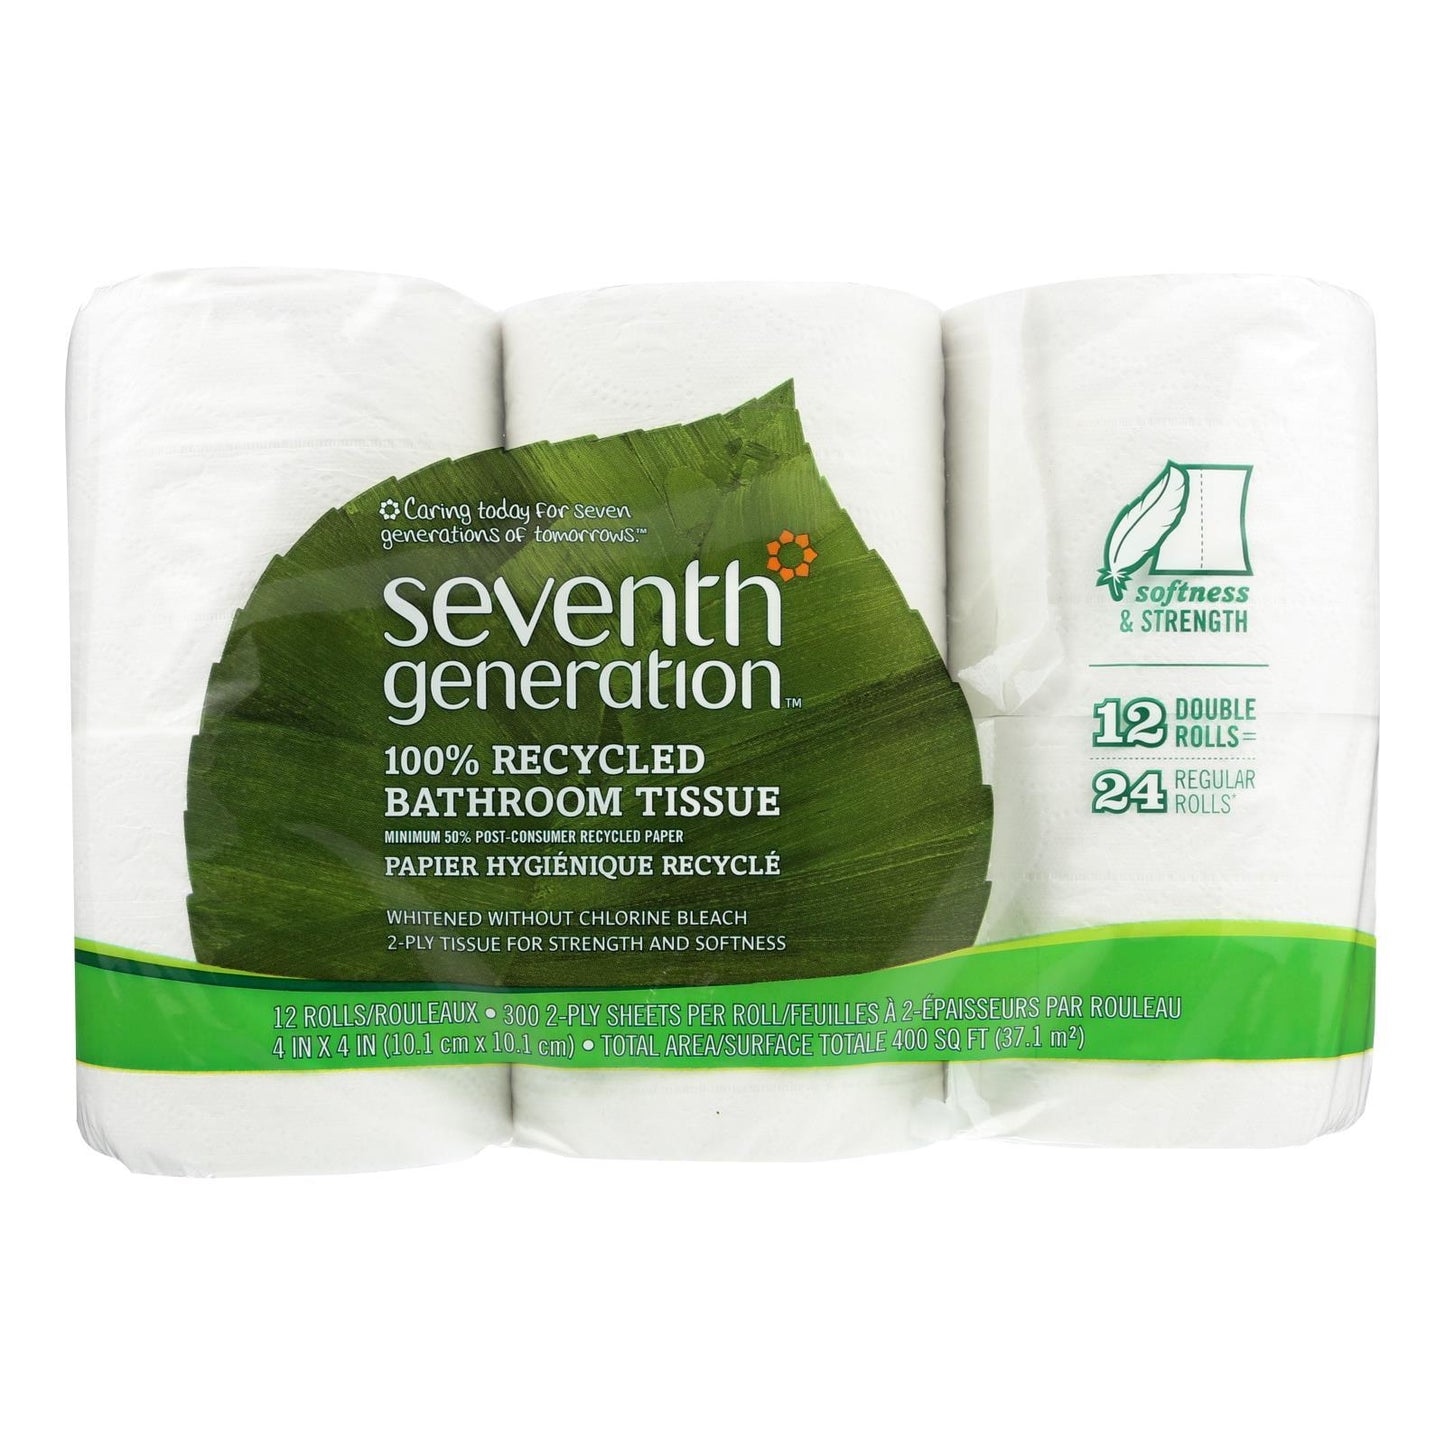 Seventh Generation Bathroom Tissue - Case Of 4 - 300 Count